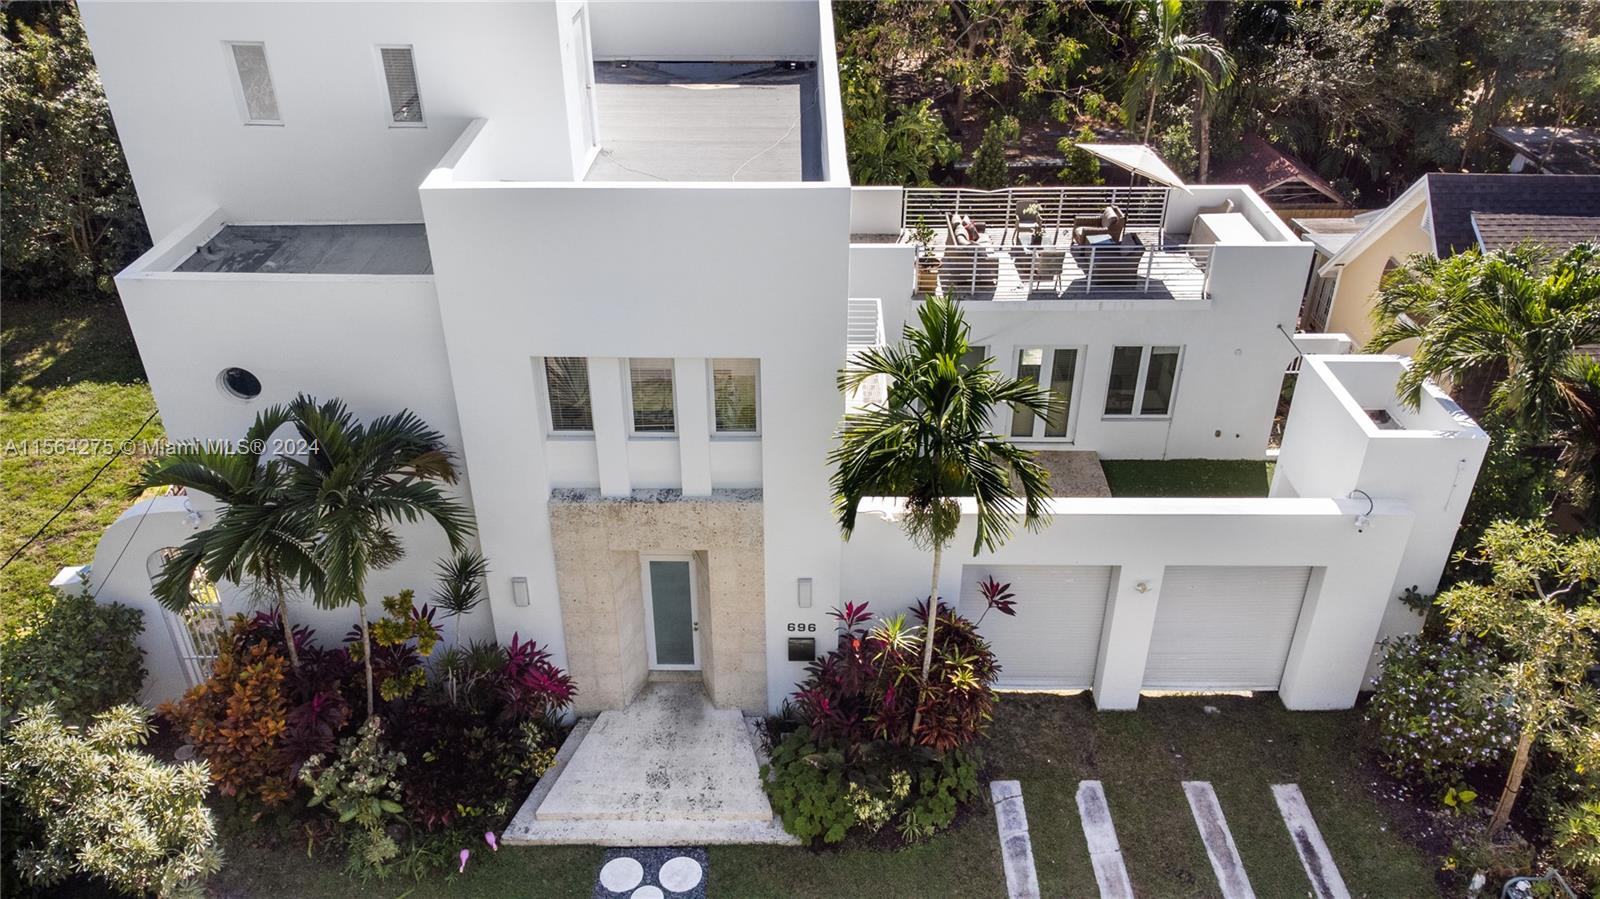 Rental Property at 696 Ne 68th St St, Miami, Broward County, Florida - Bedrooms: 3 
Bathrooms: 4  - $7,800 MO.